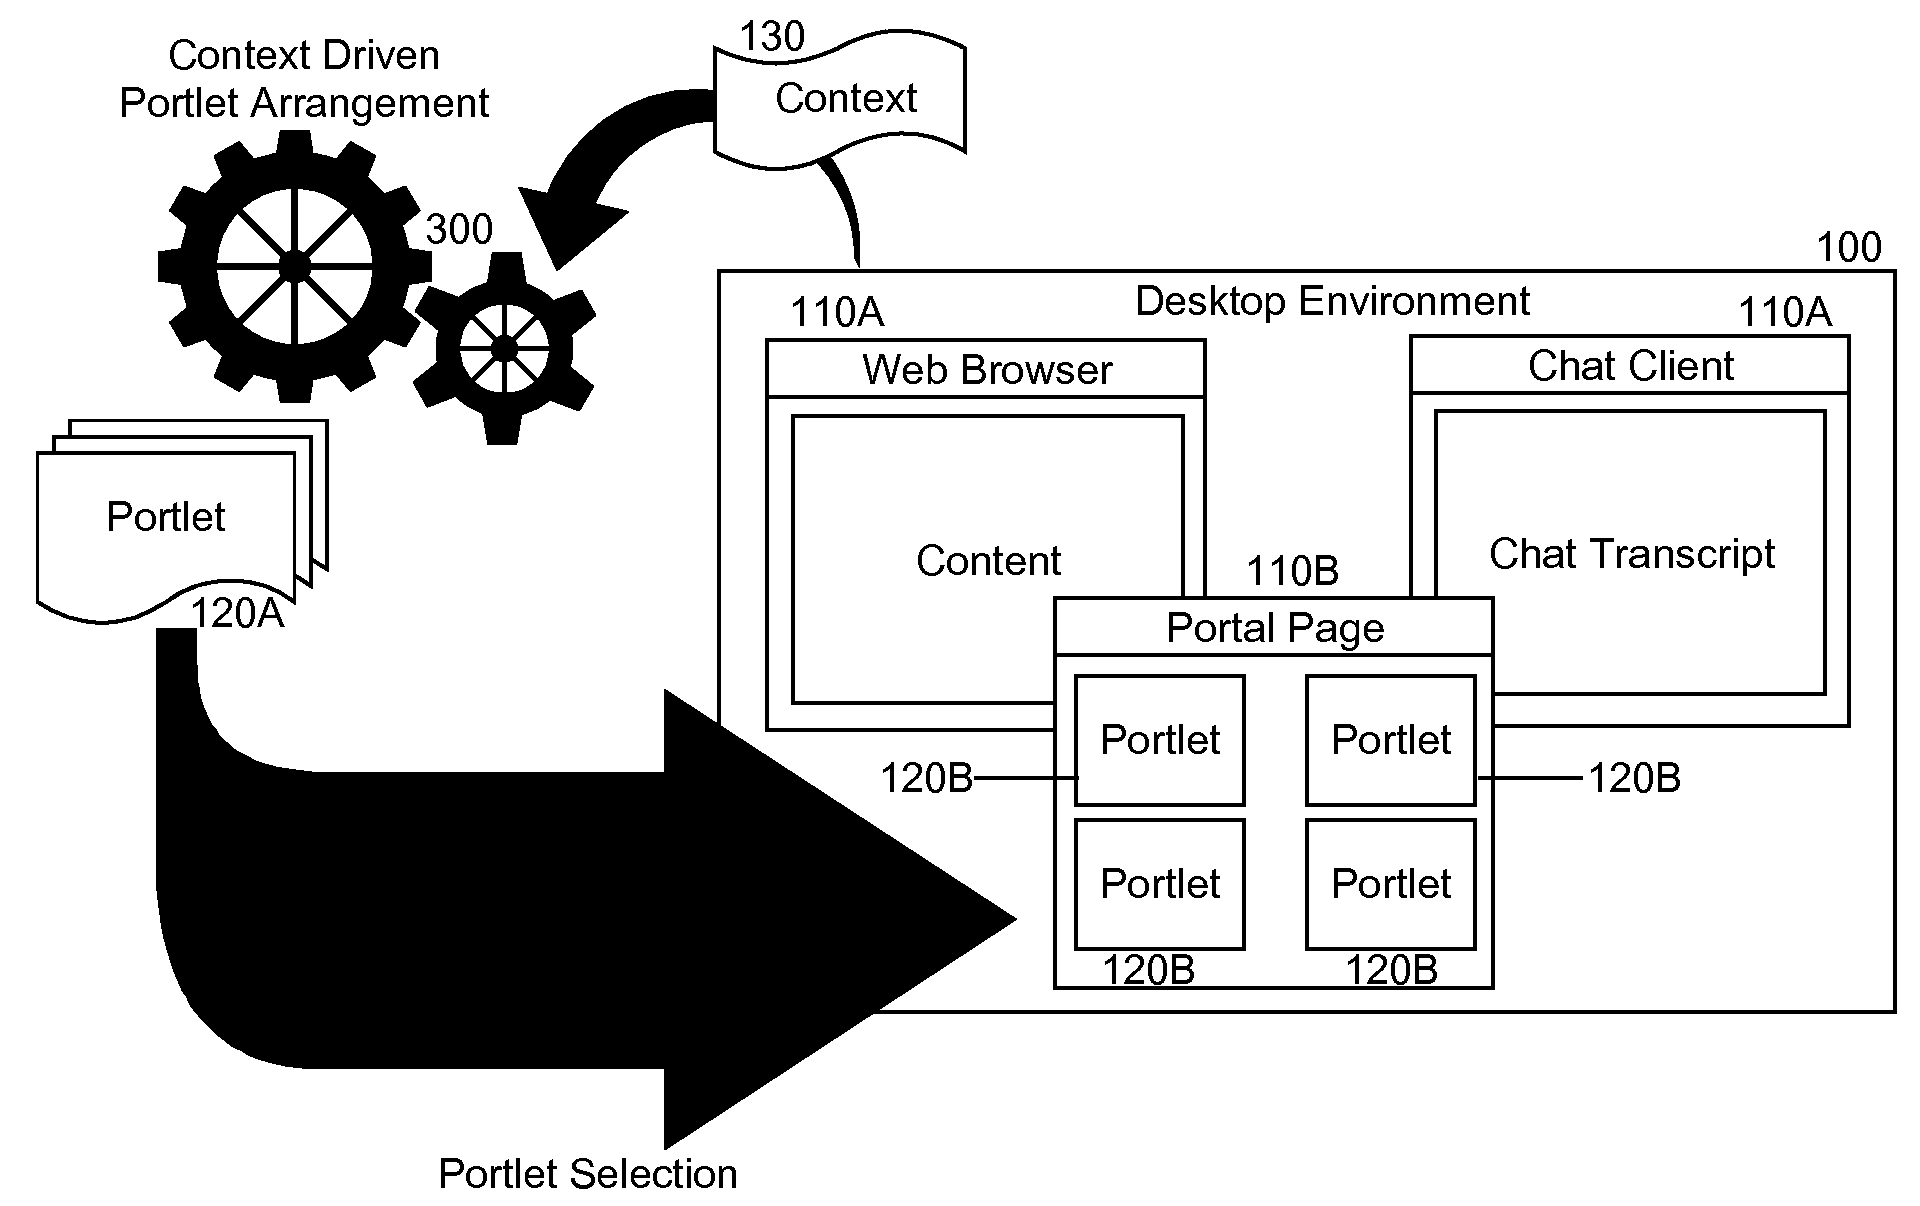 Context driven arrangement of portlets in a portal